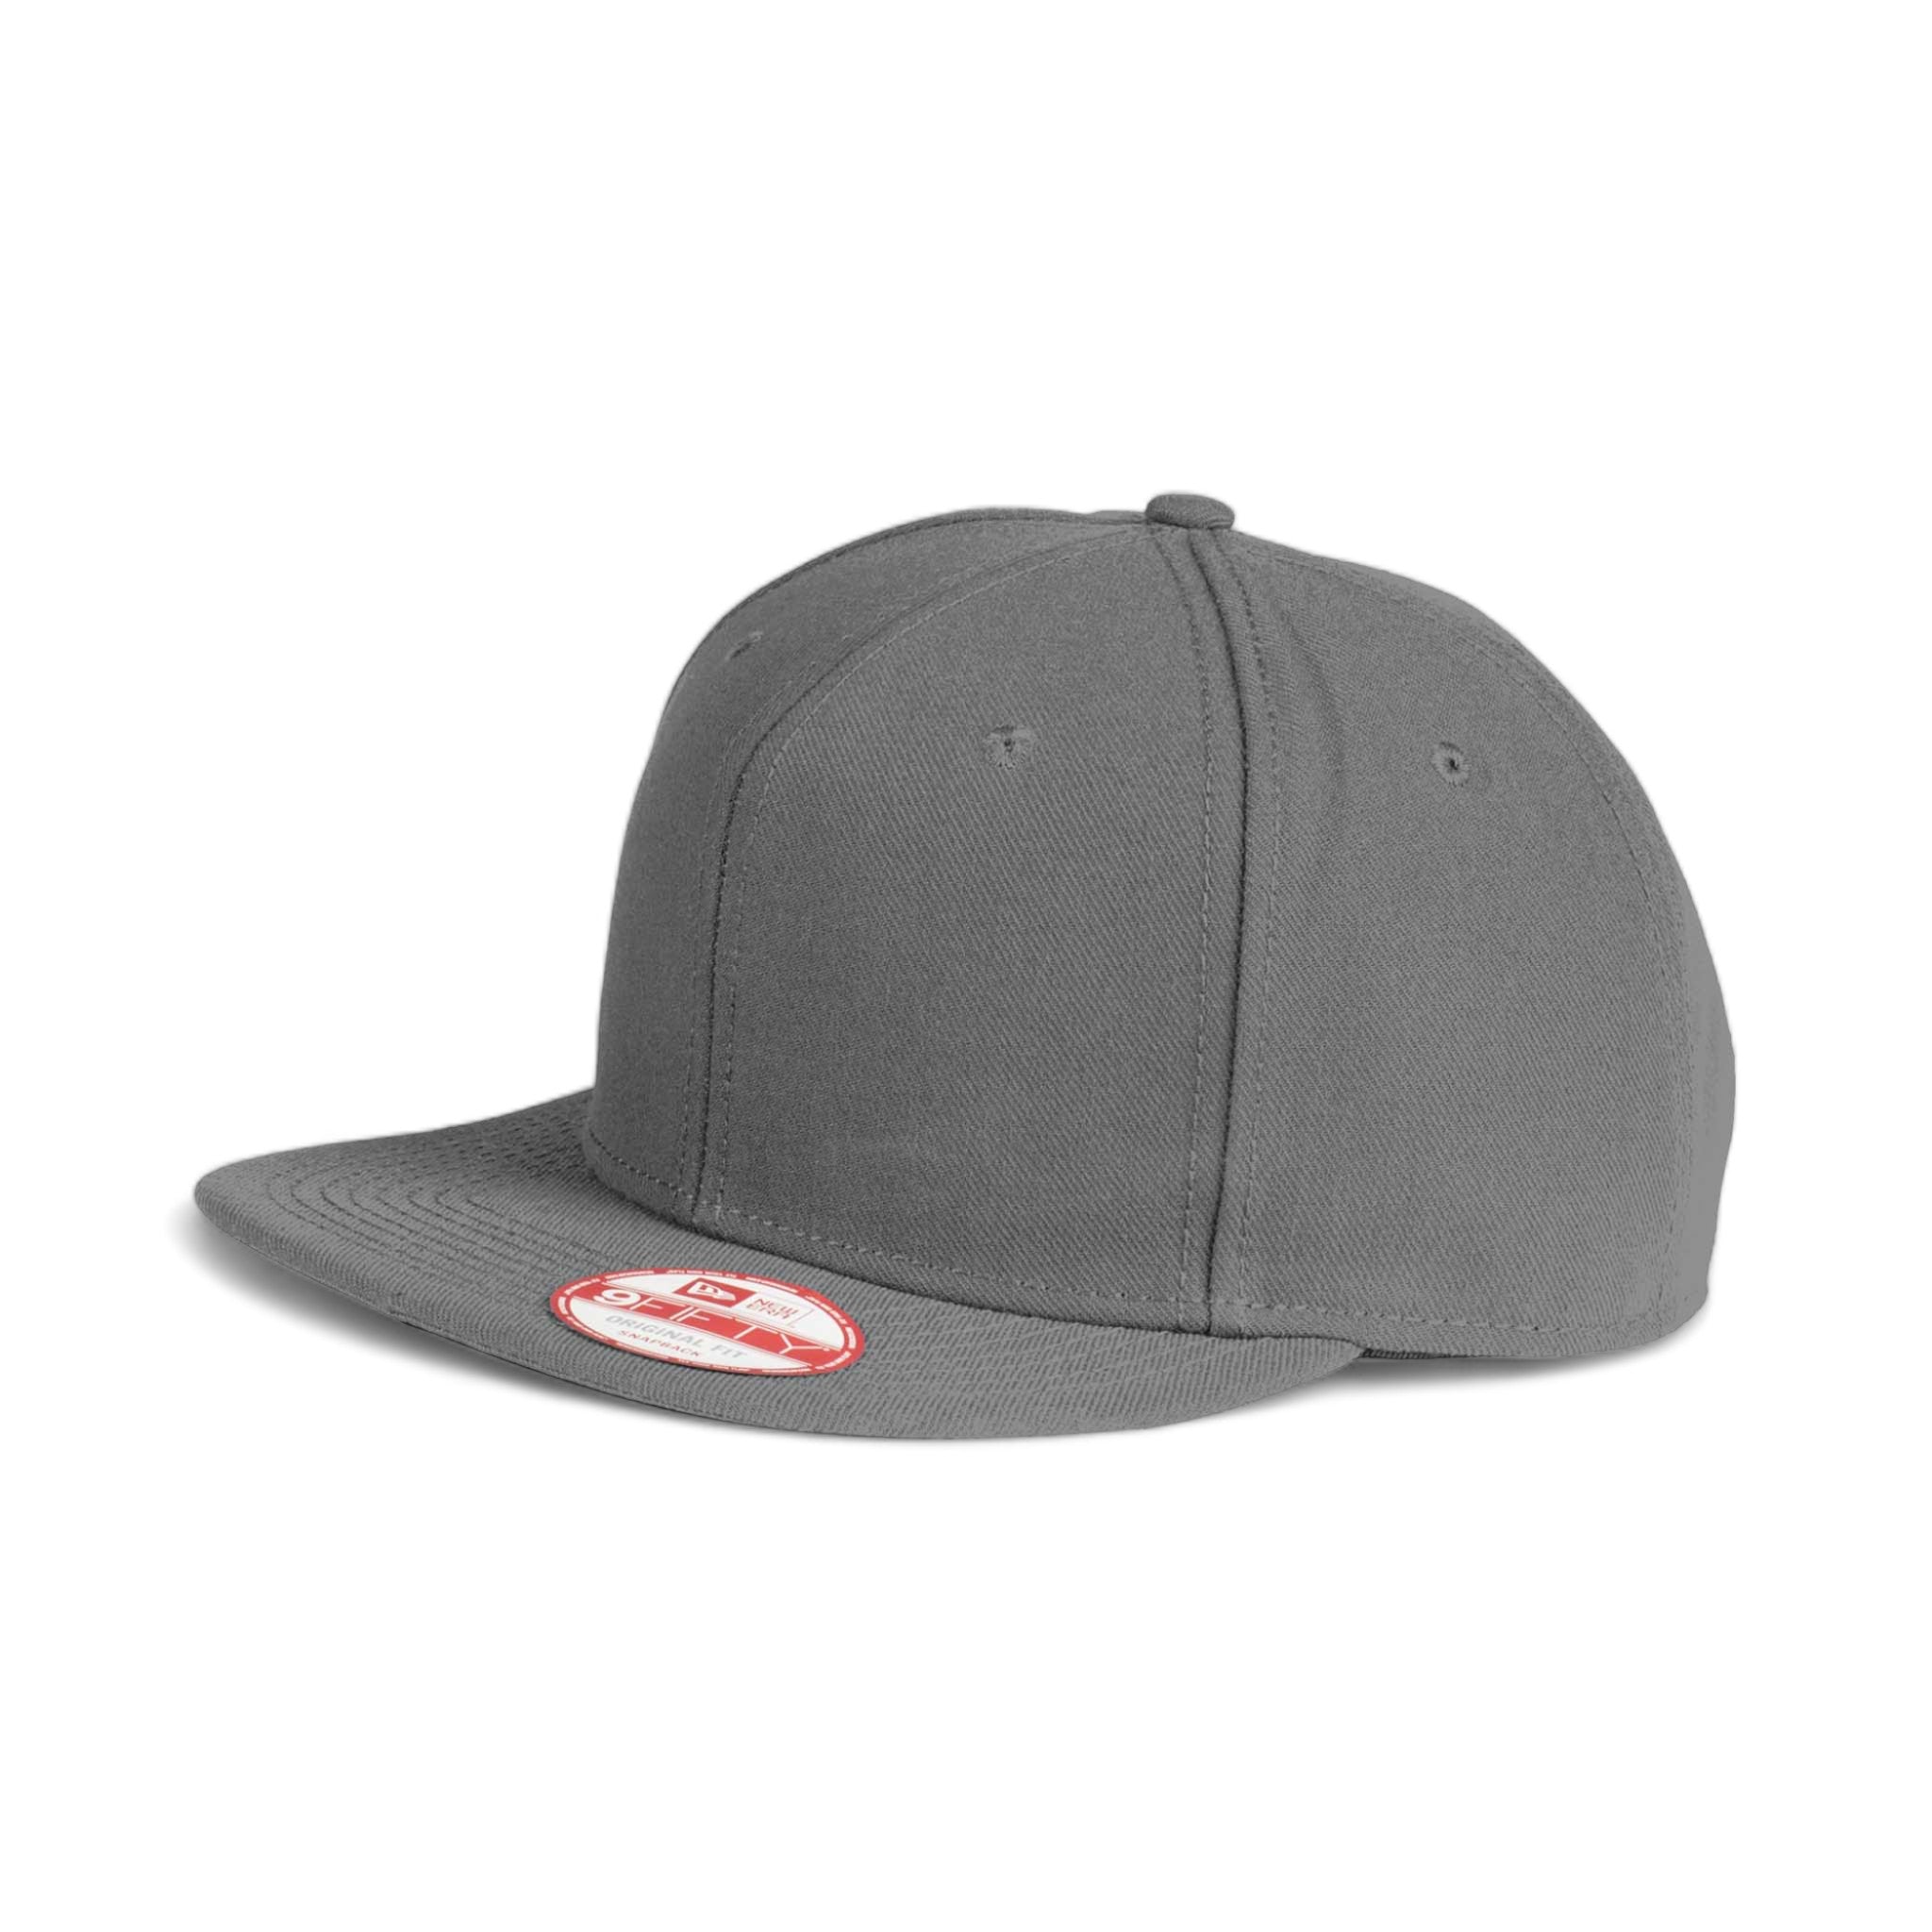 Side view of New Era NE402 custom hat in graphite